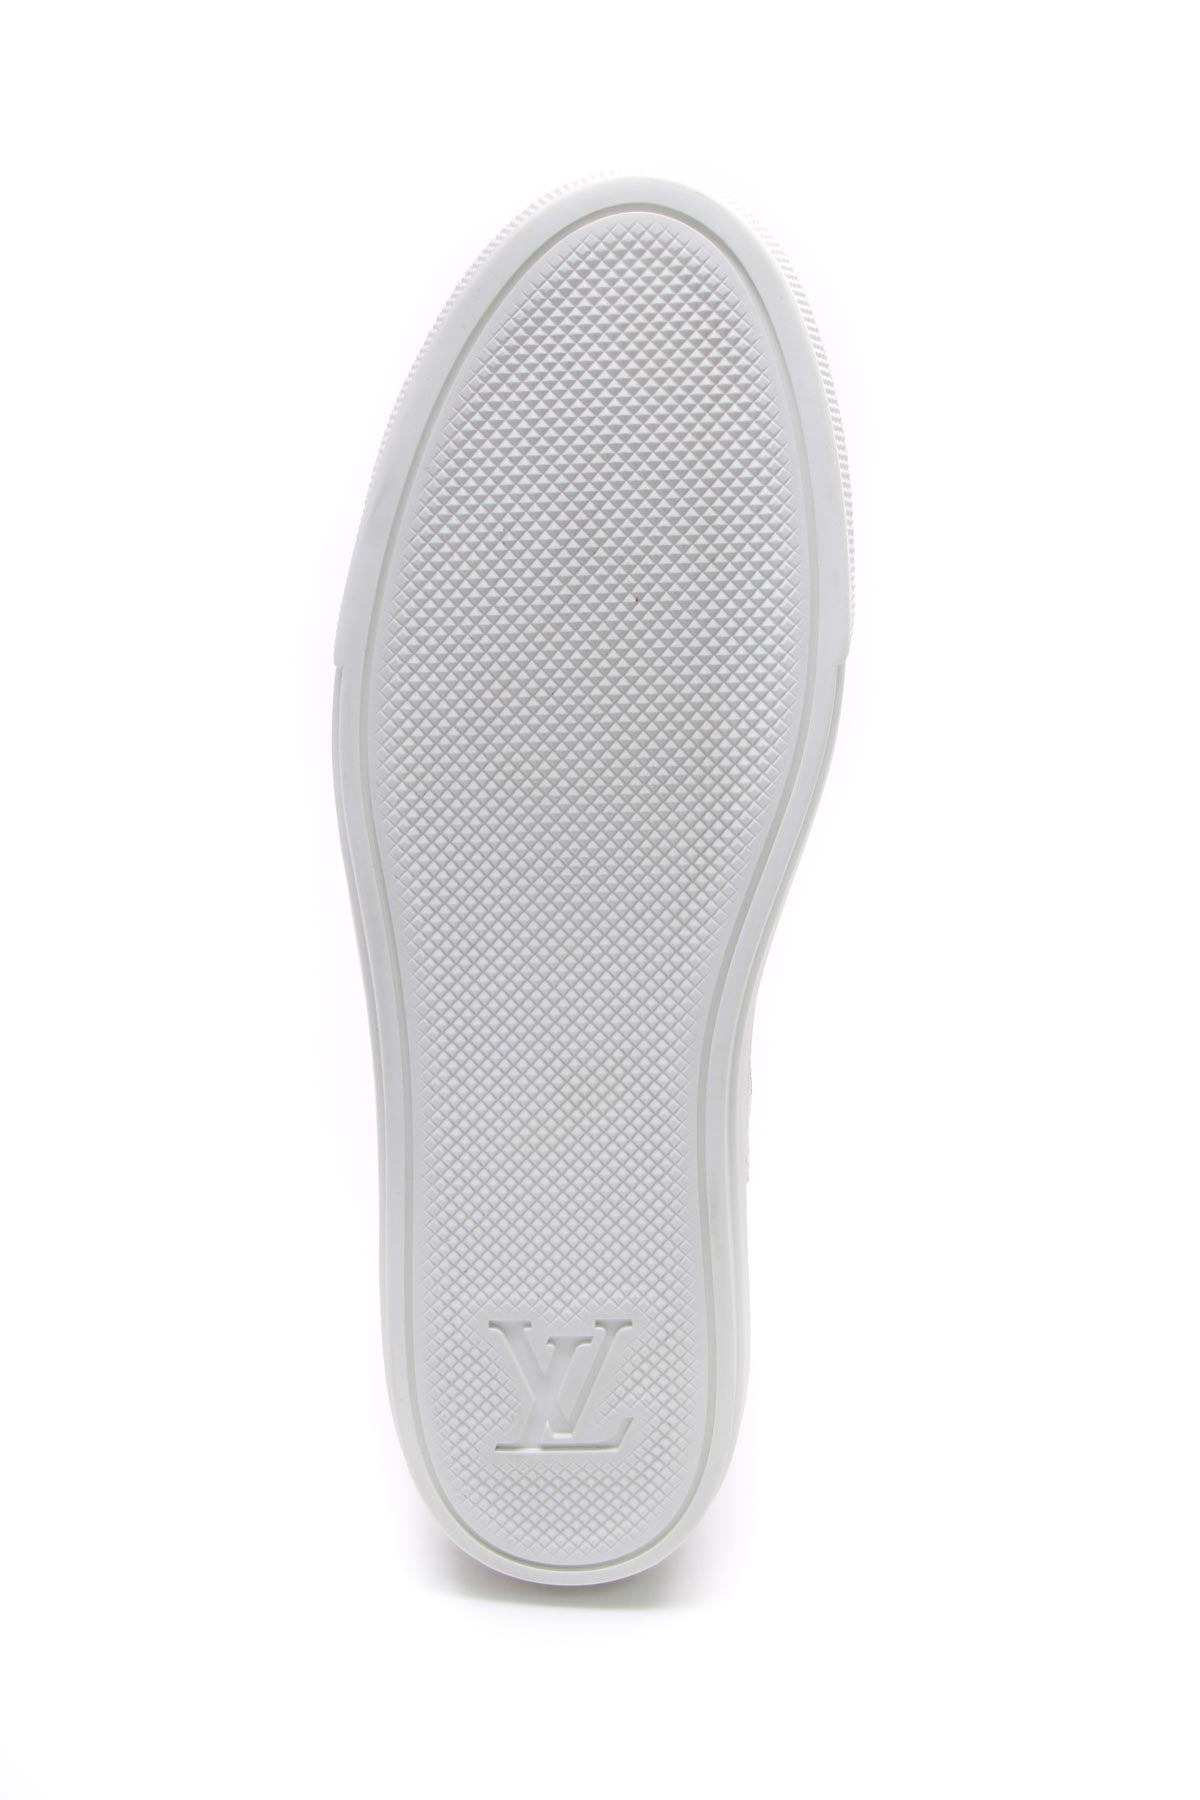 Louis Vuitton White/Pink Mesh and Leather Stellar Sneaker Mules Size 38.5 Louis  Vuitton